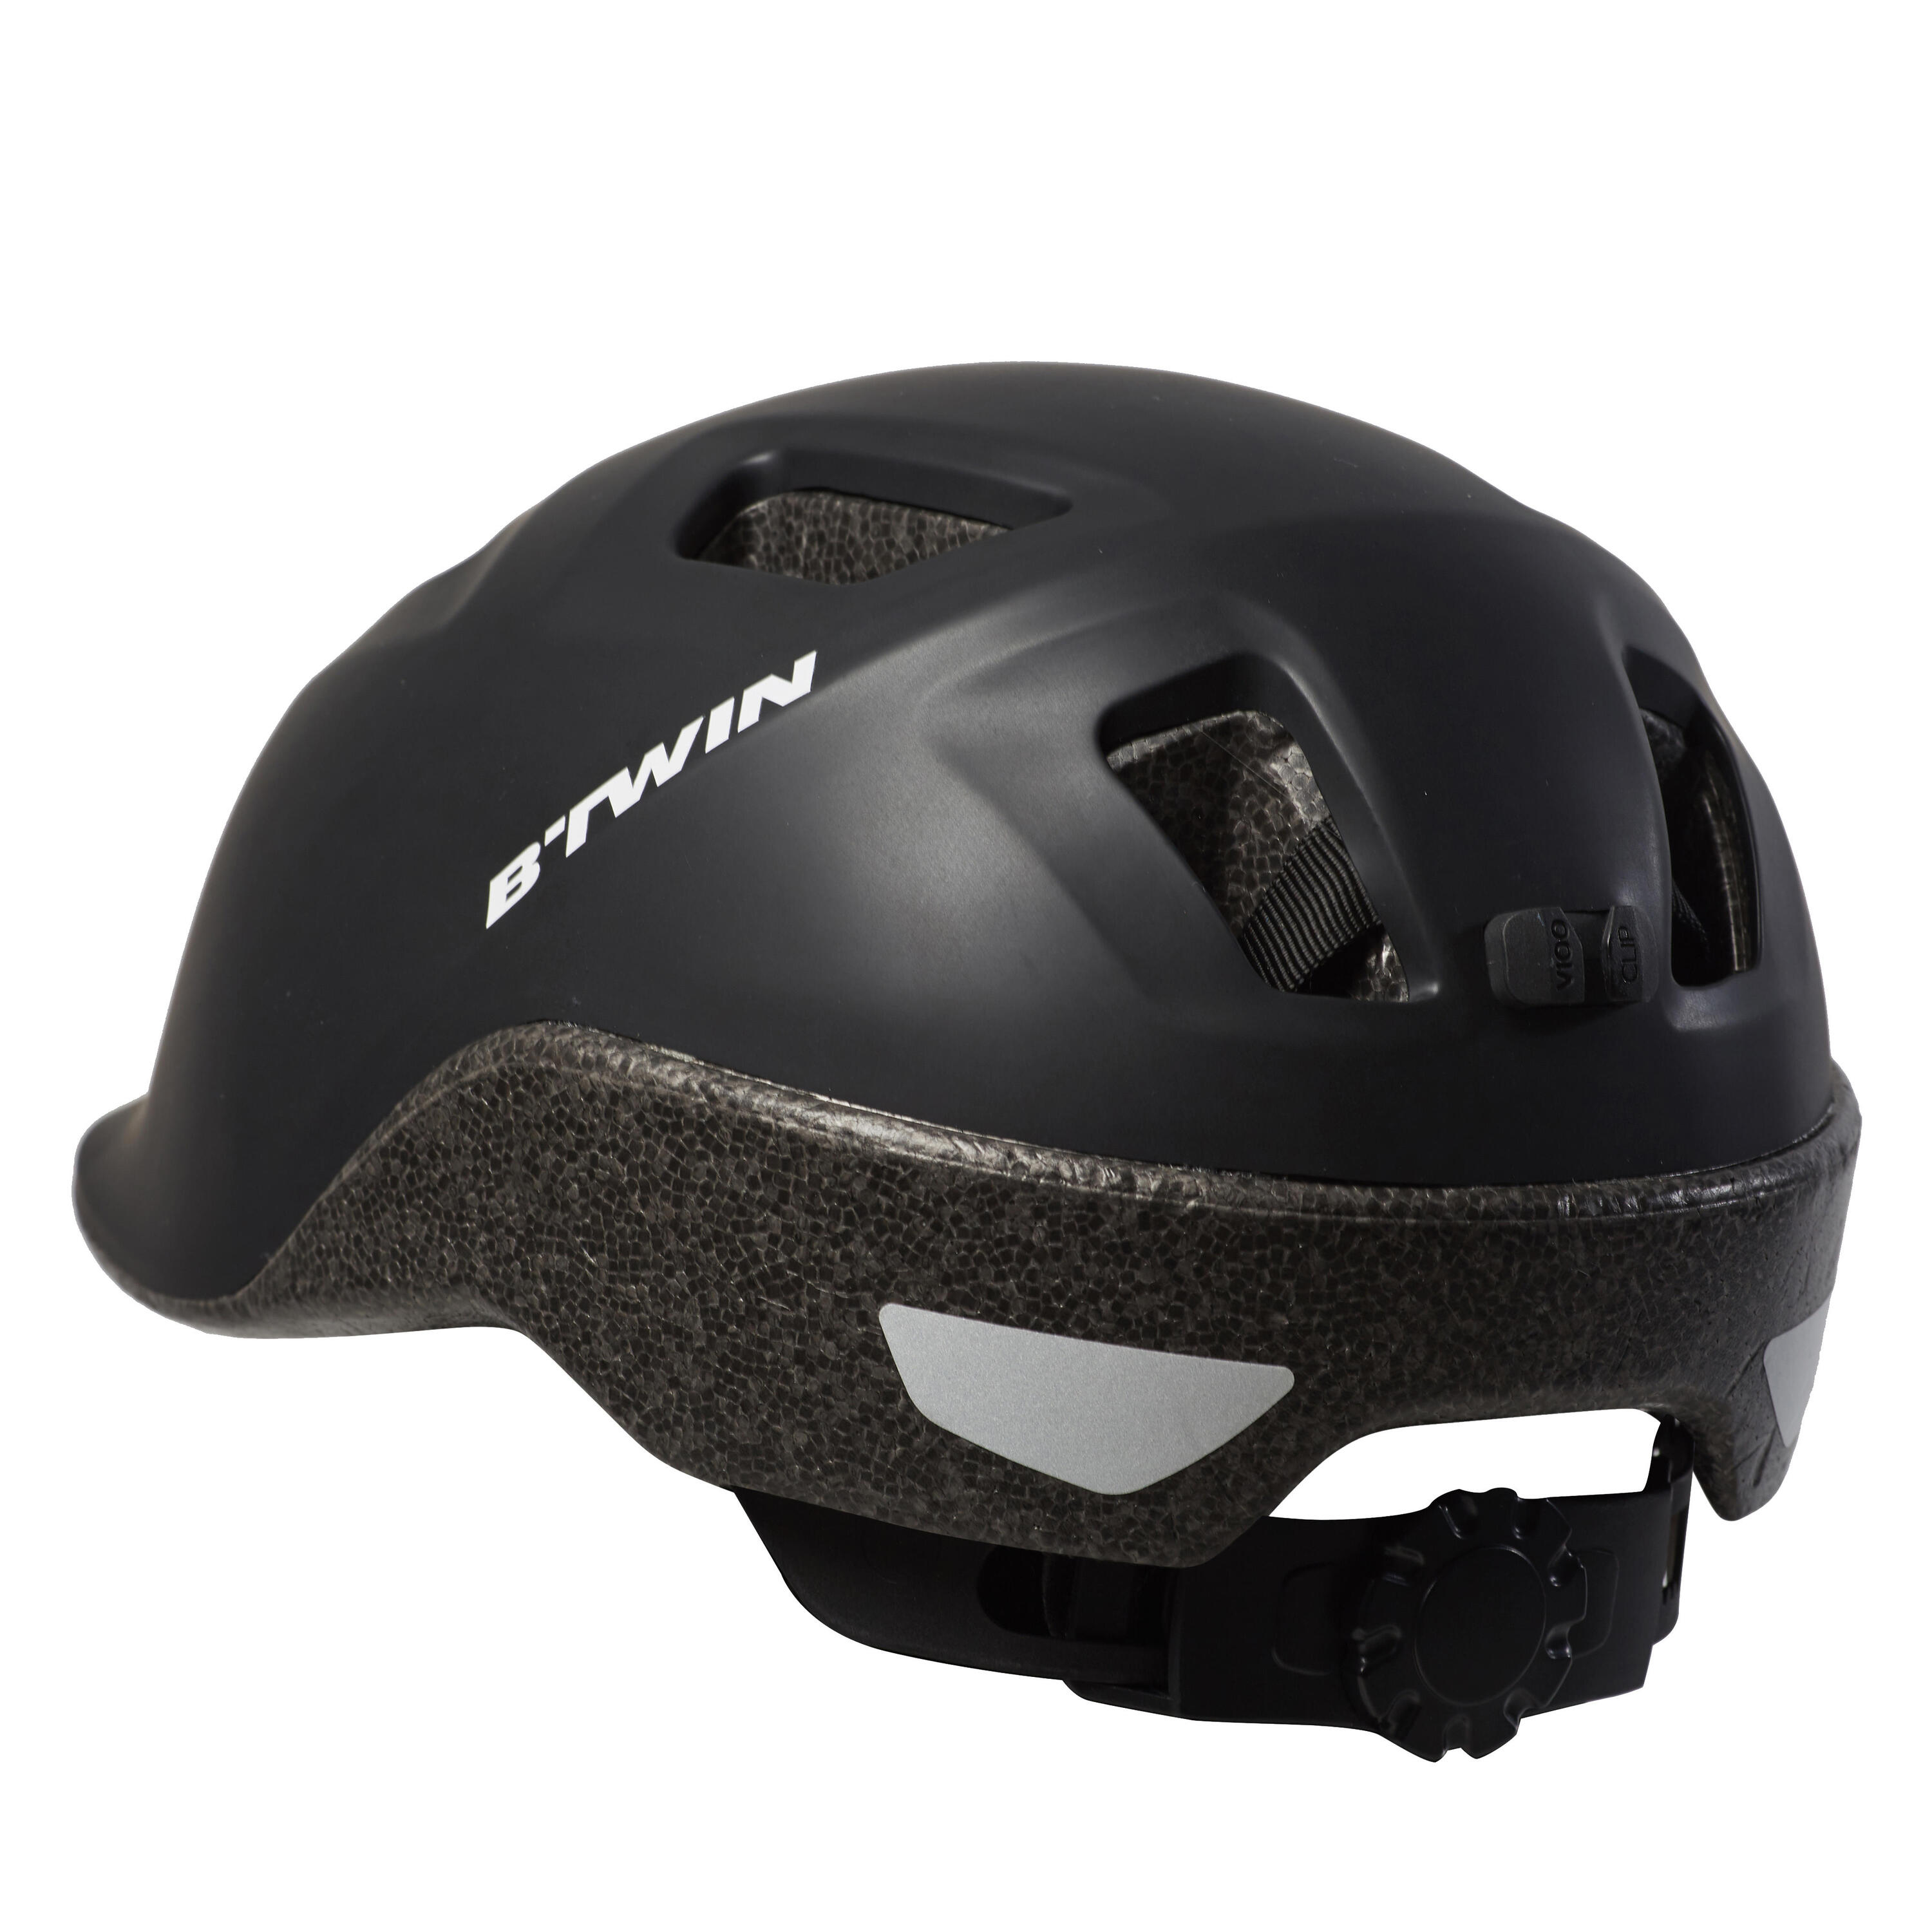 BTWIN 100 City Cycling Helmet - Black